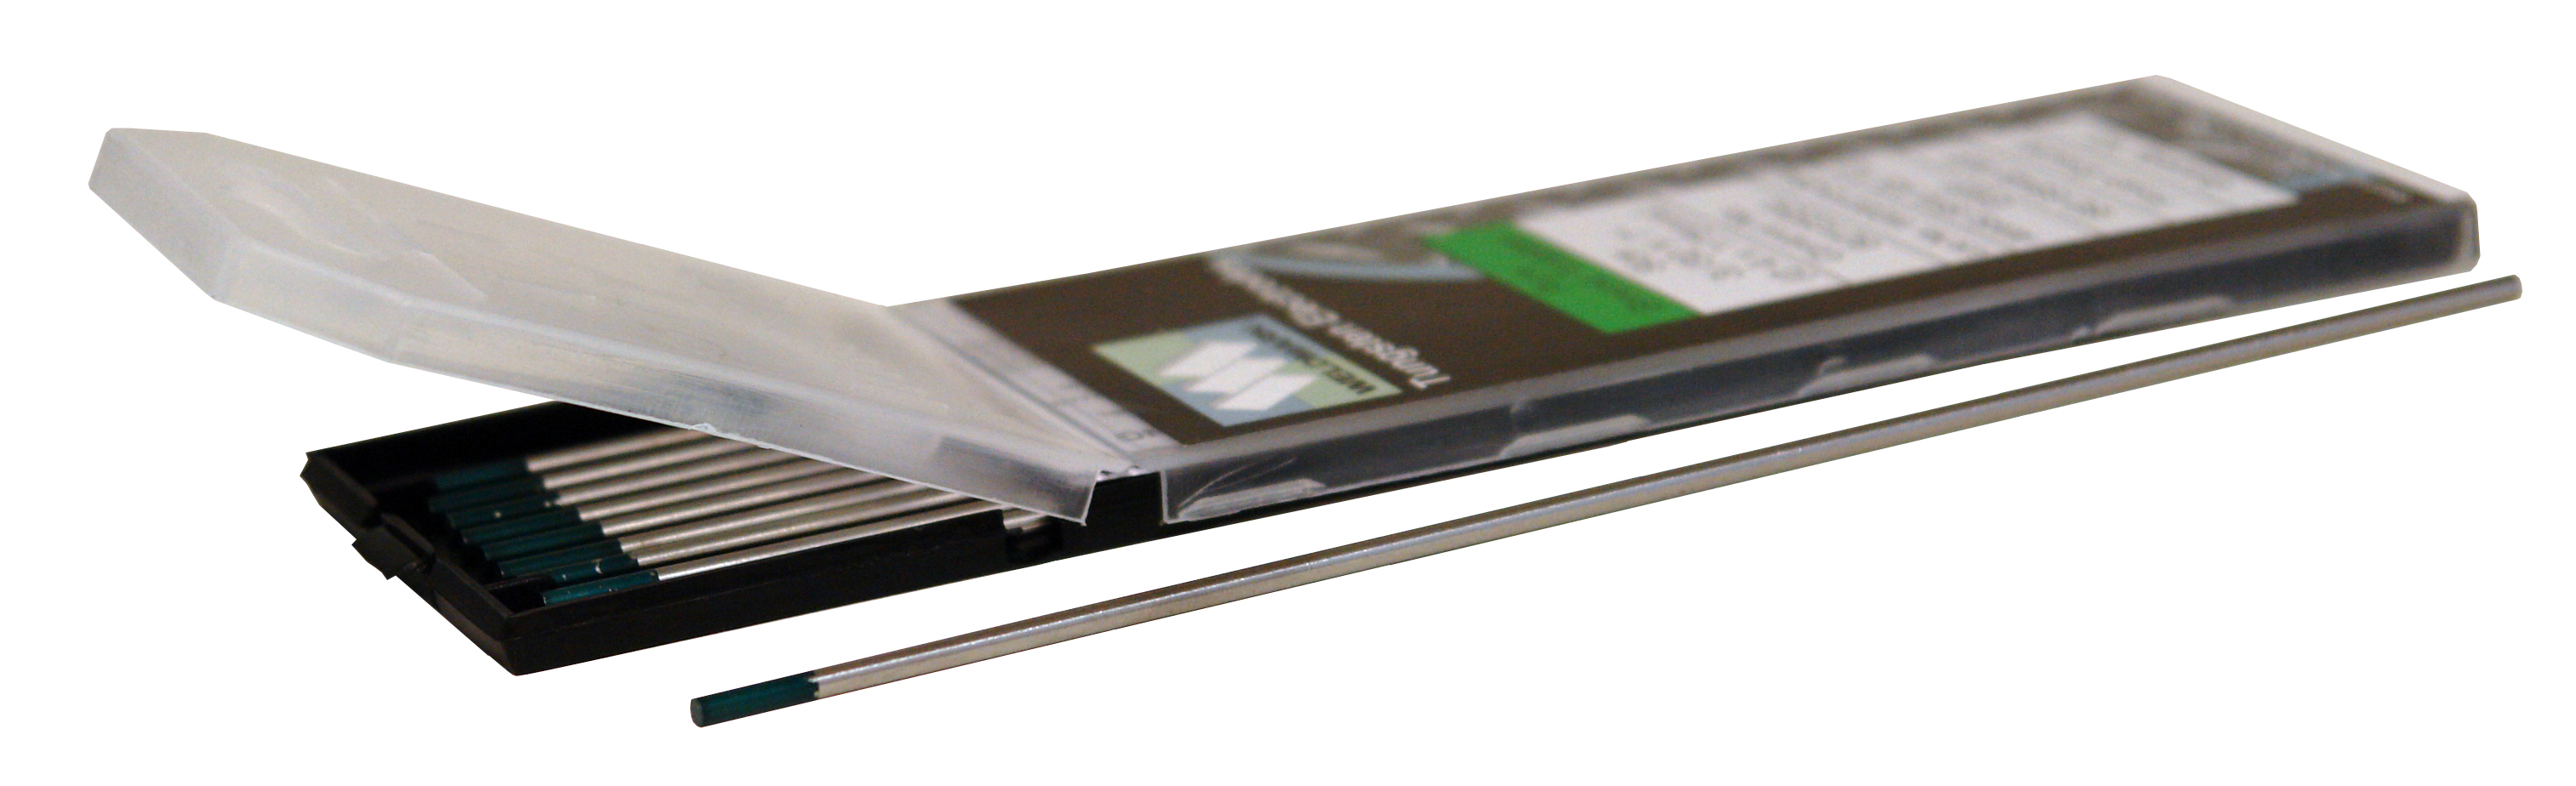 Green Tip Pure Tungsten Electrodes, 3/32 (0.094) Diameter, 10 Pack